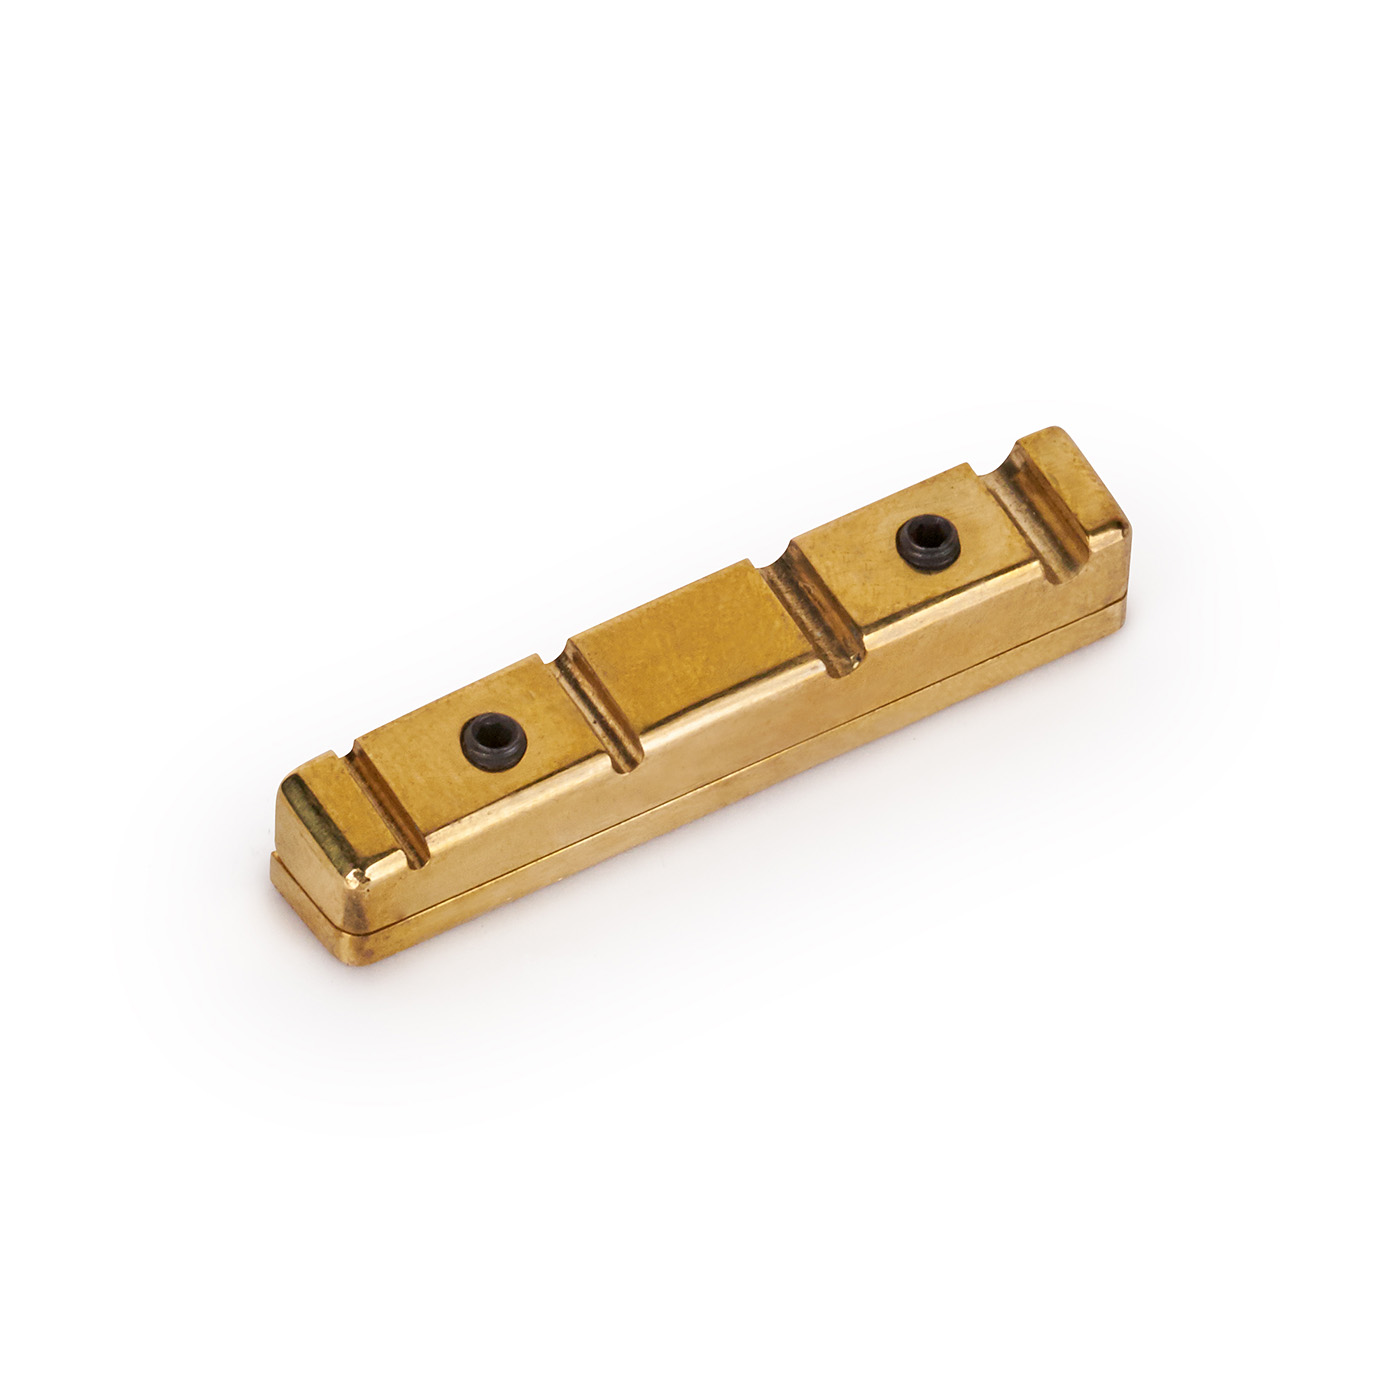 Warwick Parts - Just-A-Nut III, 4-String, 44 mm width - Brass